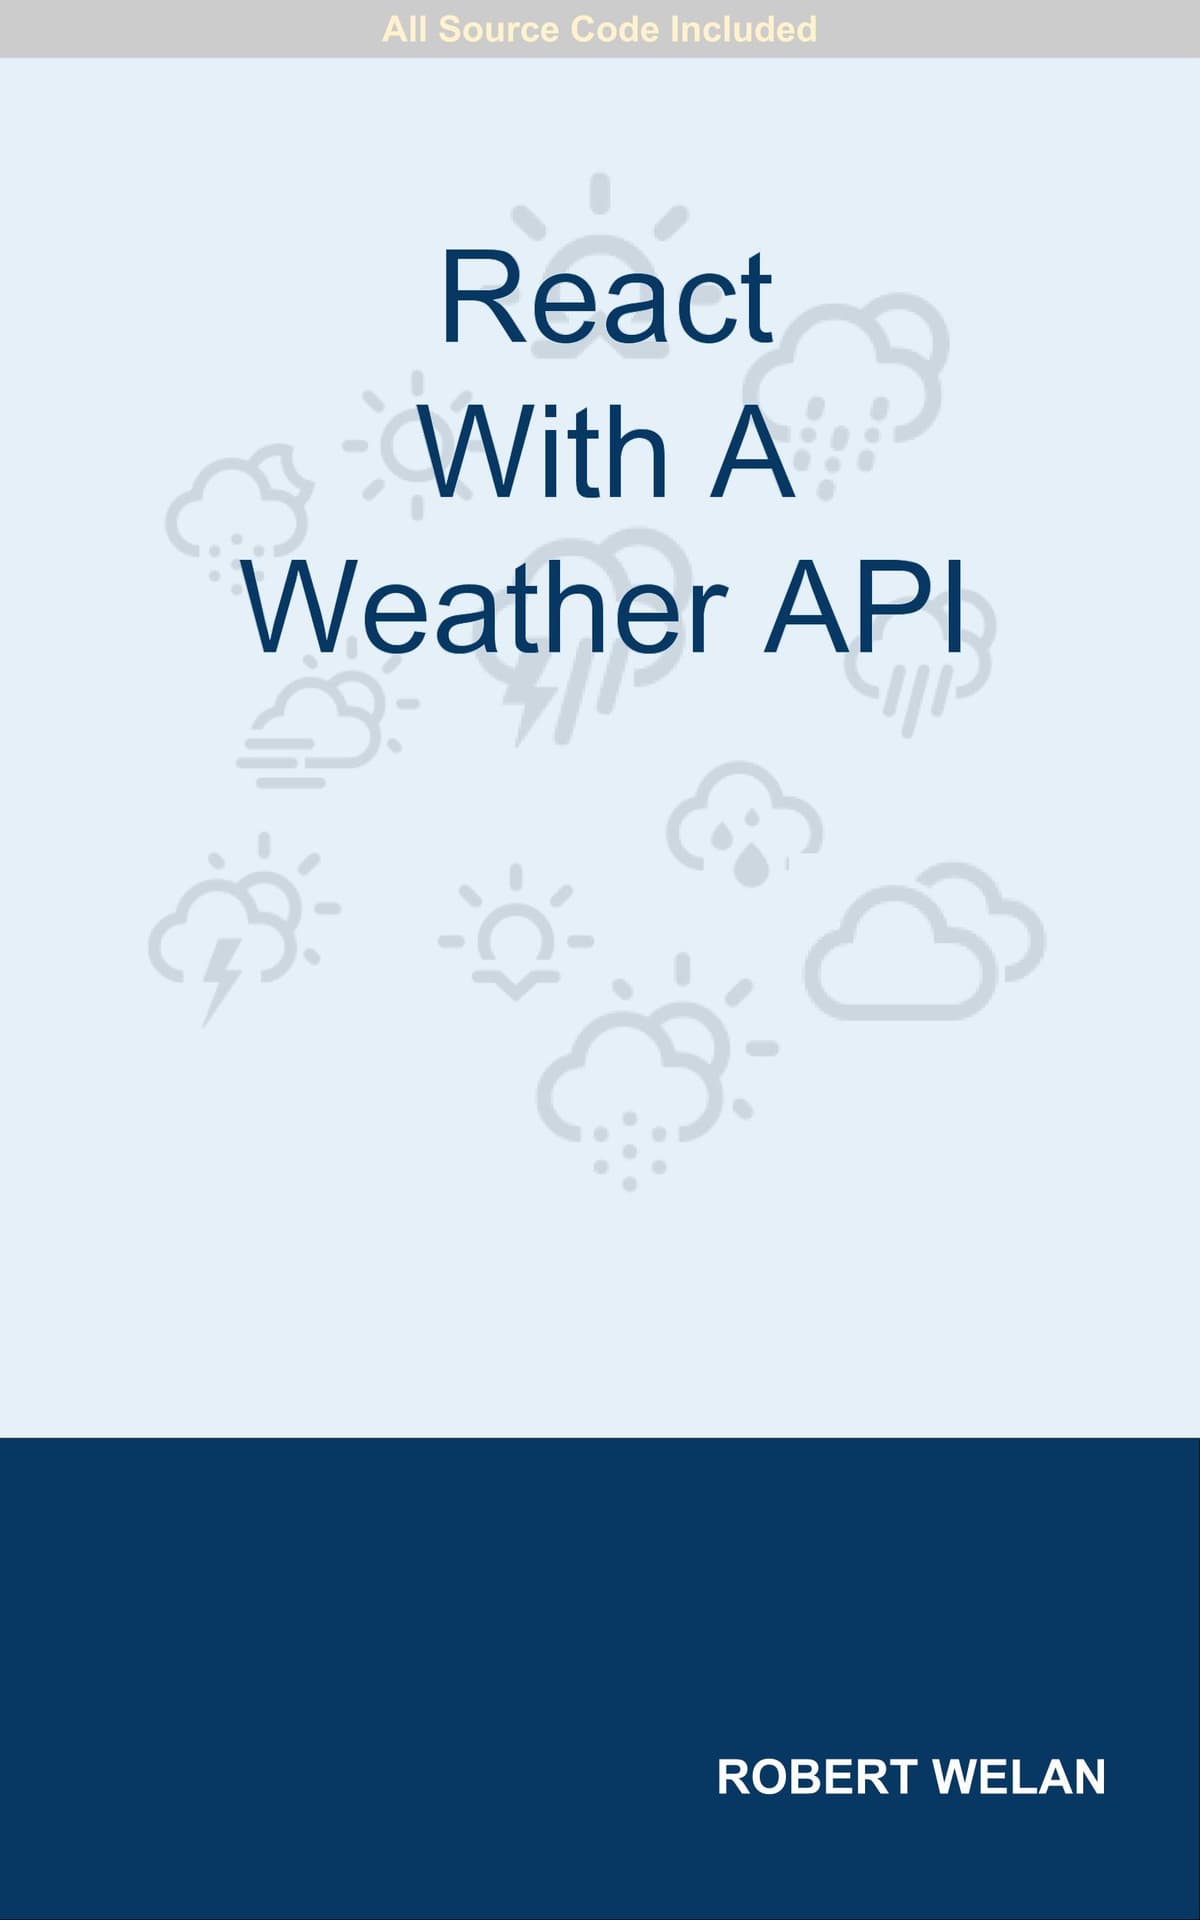 ReactJS with A Weather API